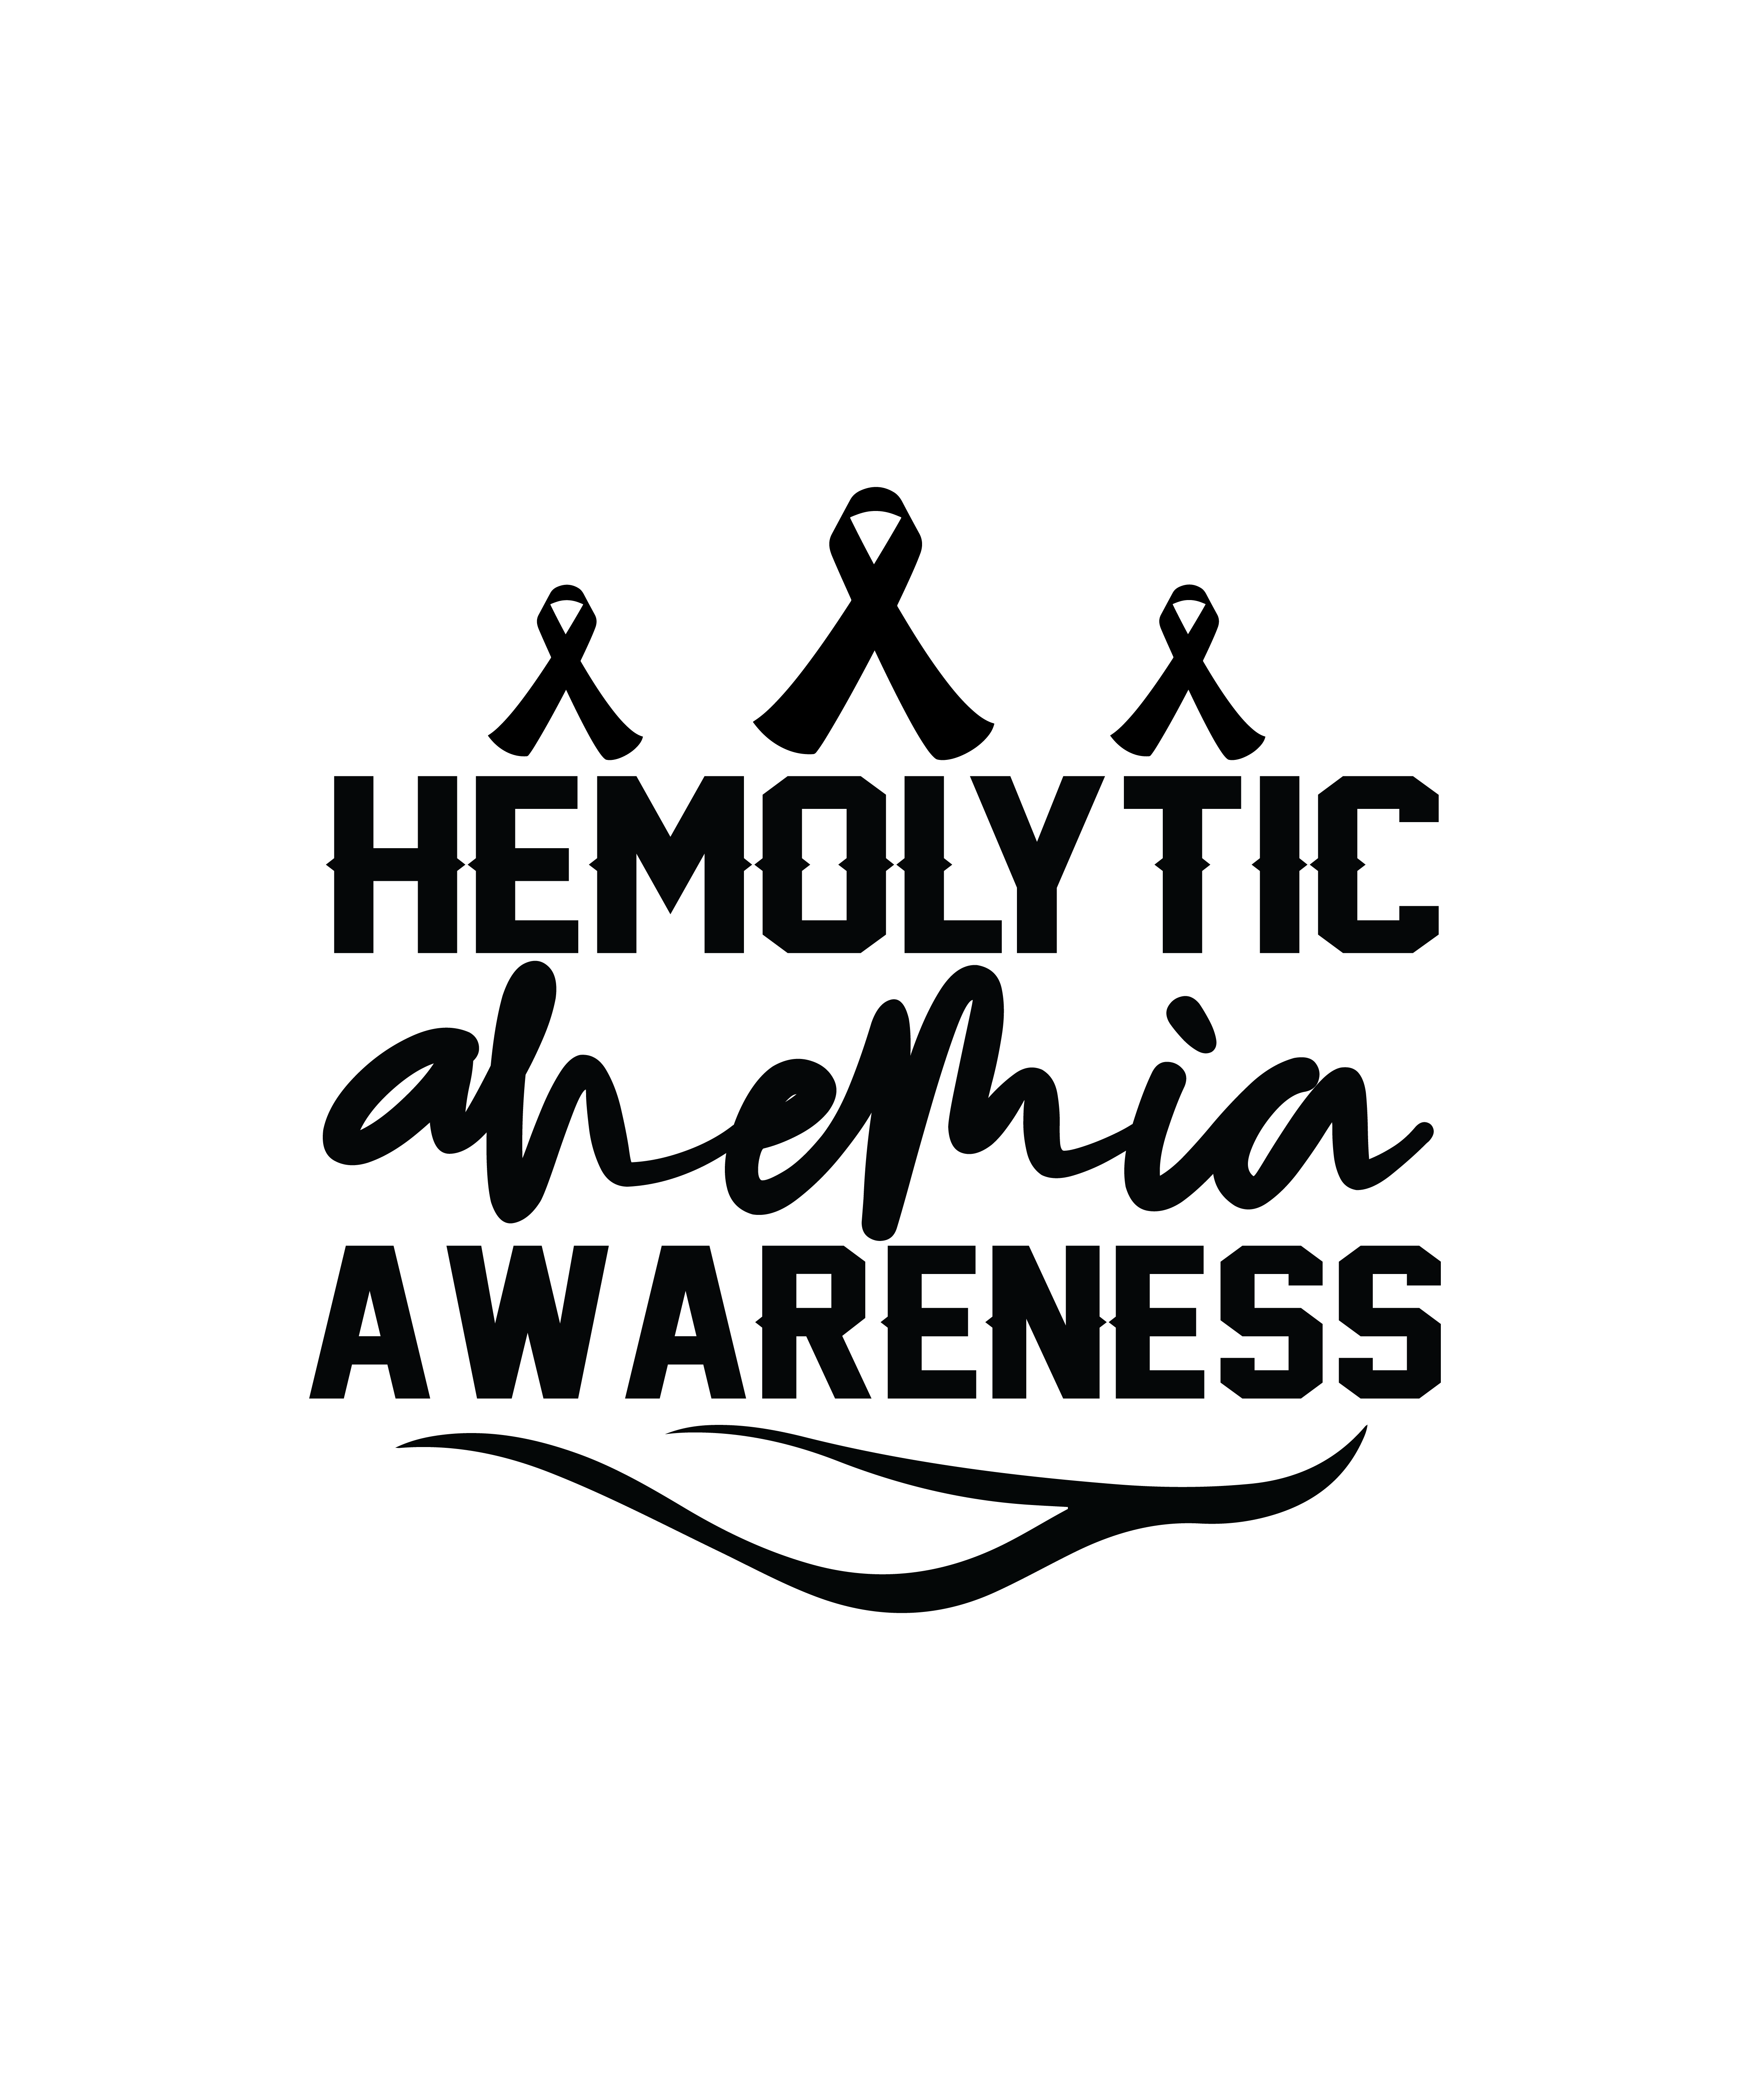 hemolytic anemia awareness 01 891